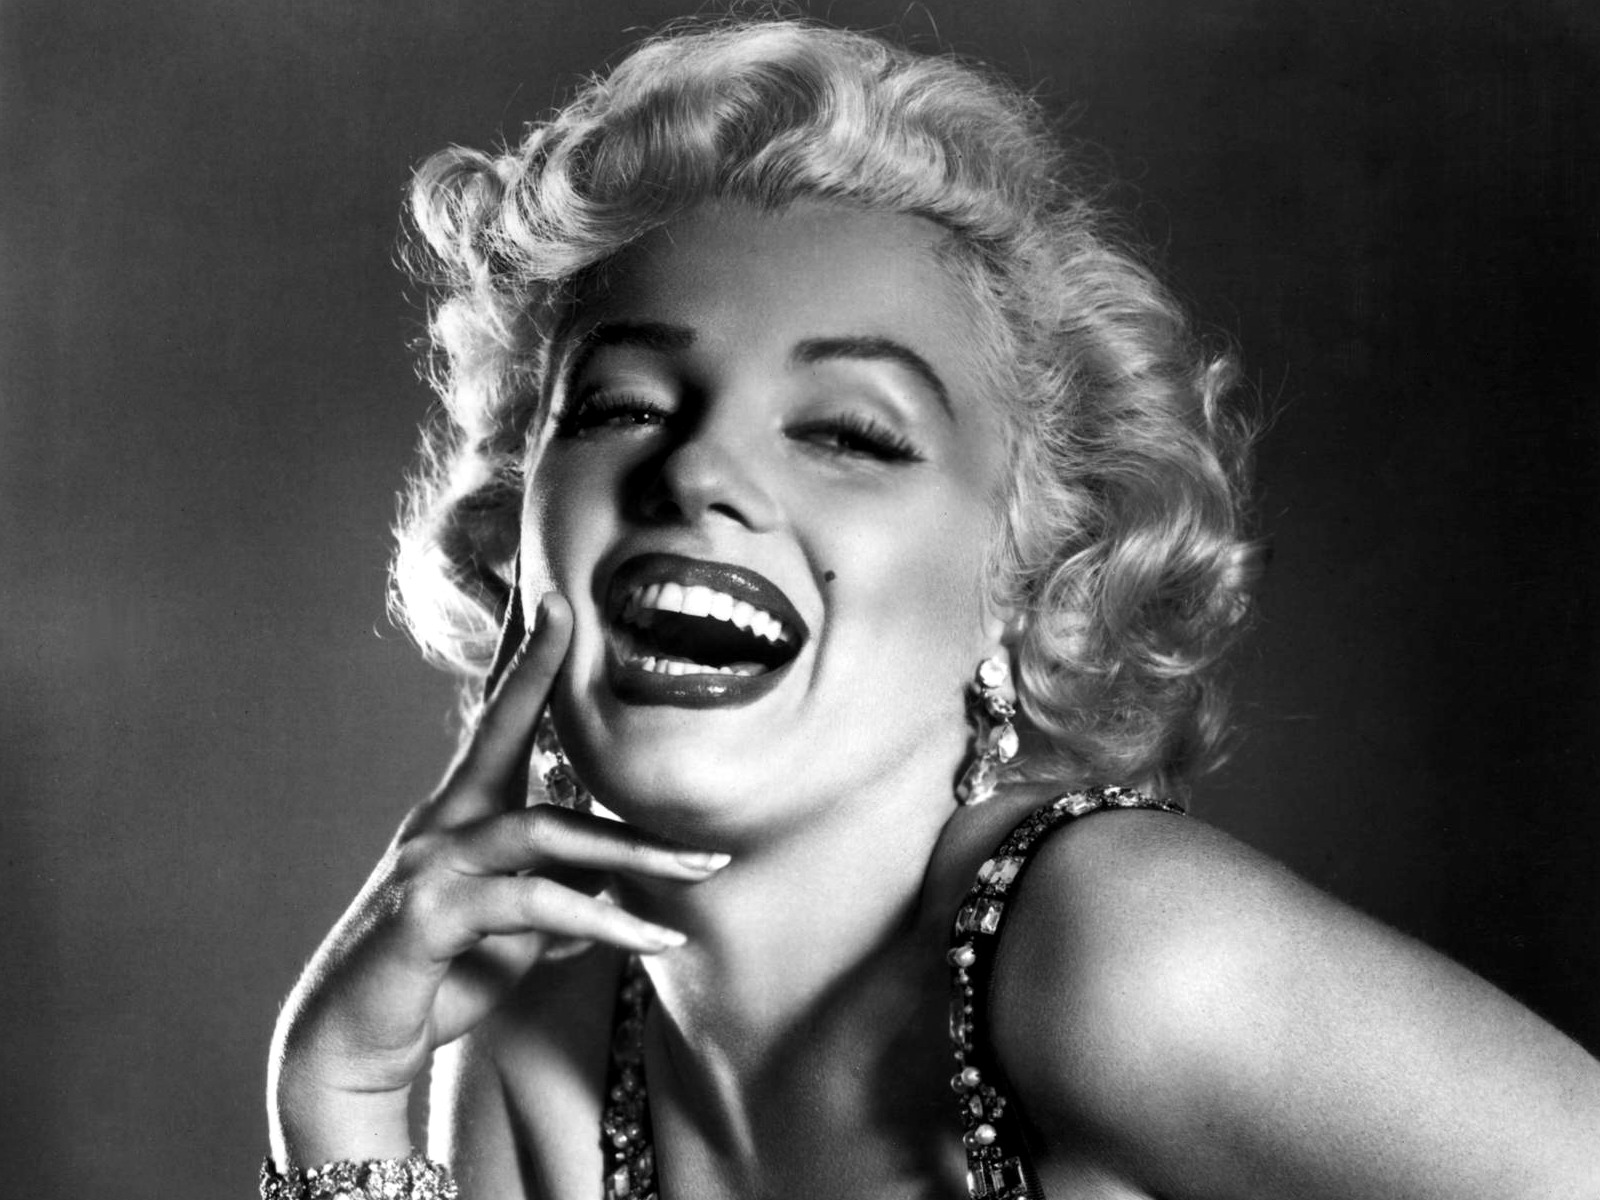 http://4.bp.blogspot.com/-HdnIZekkxrM/UAaebdnxriI/AAAAAAAANRg/efJa9kS22Mw/s1600/Marilyn-Monroe-wallpaper_018.jpg